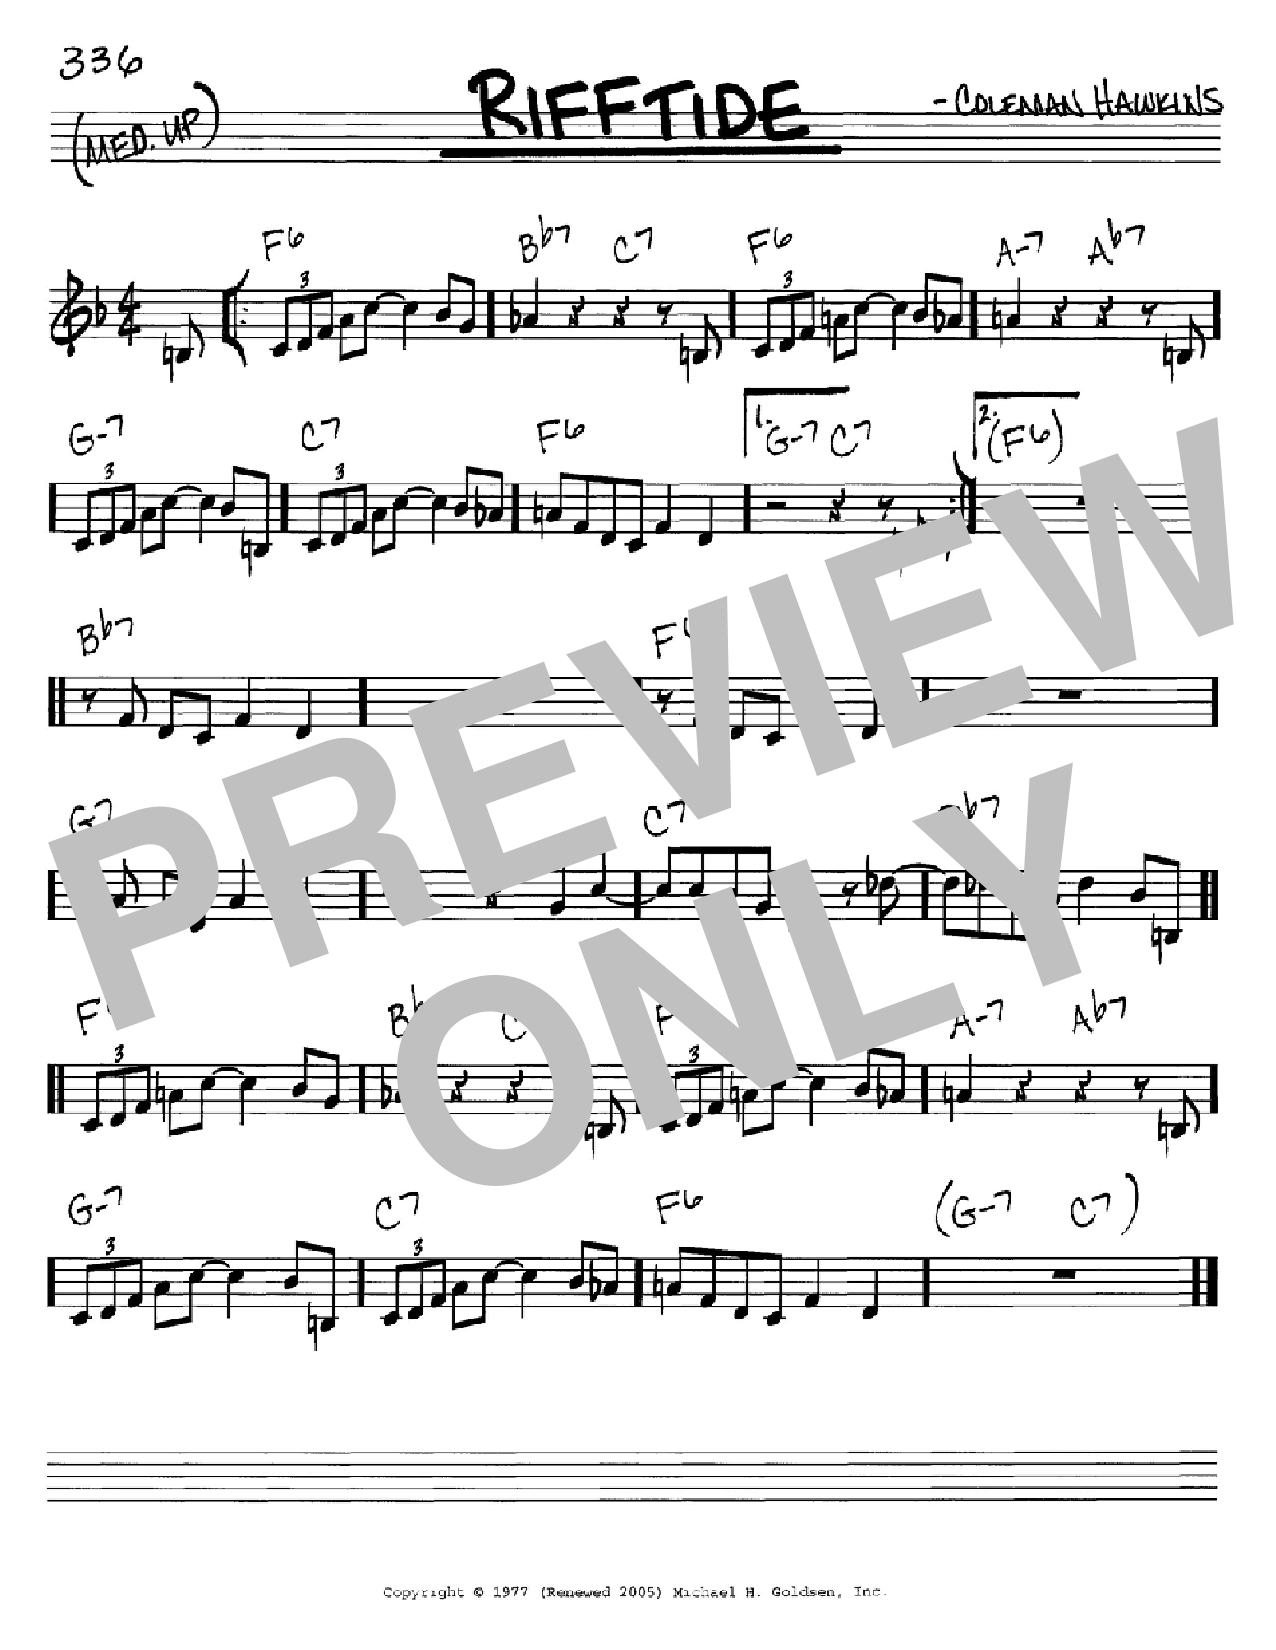 Download Coleman Hawkins Rifftide Sheet Music